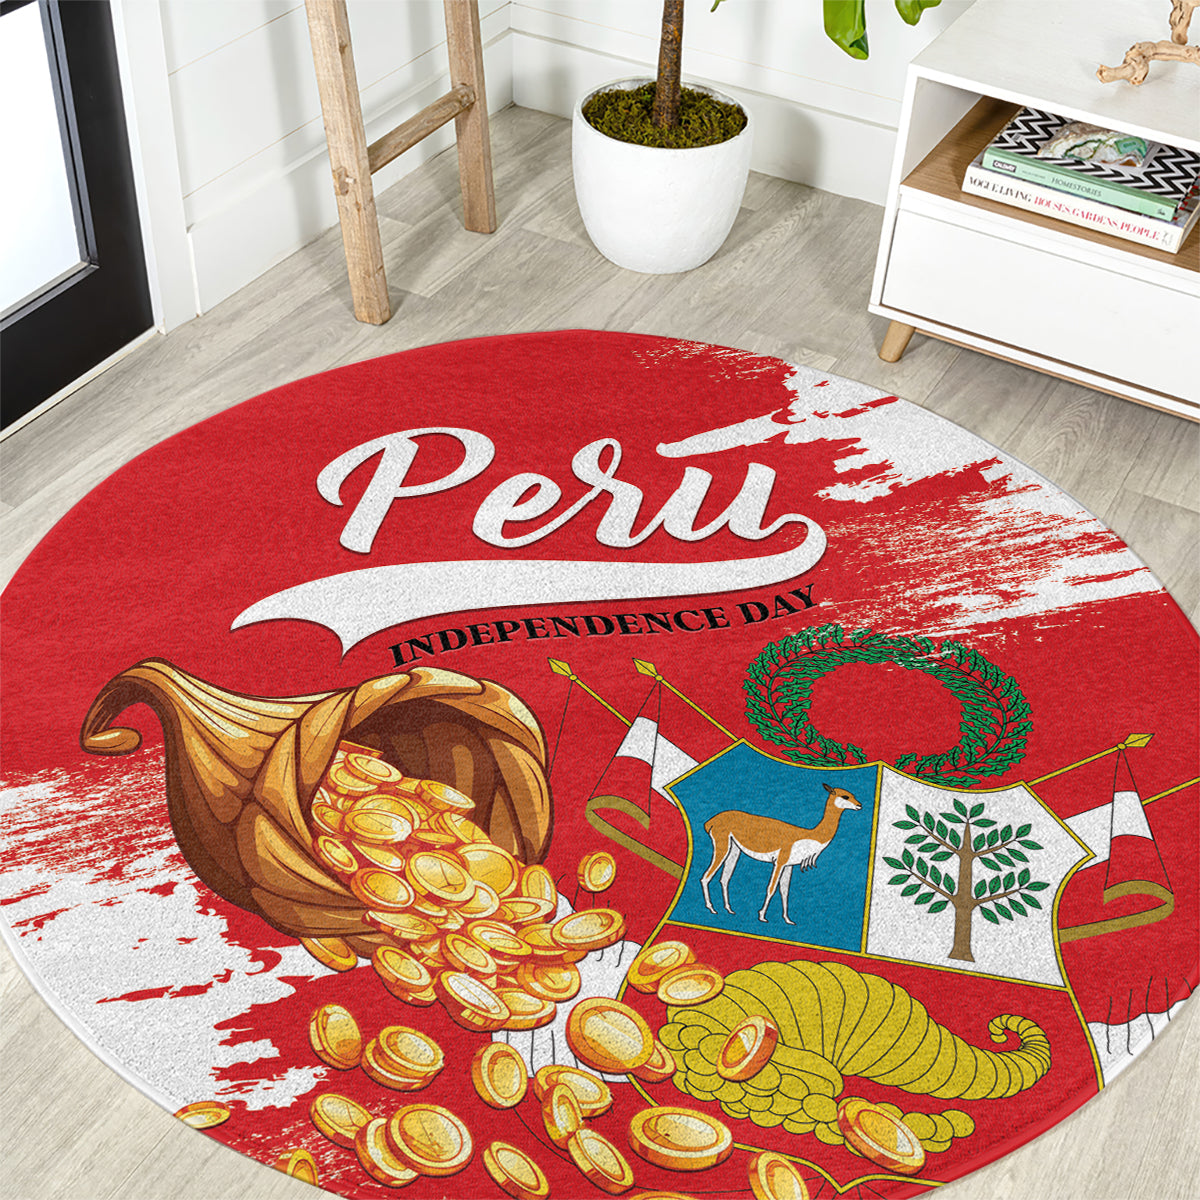 Peru Independence Day Round Carpet Feliz 28 de Julio Felices Fiestas Patrias